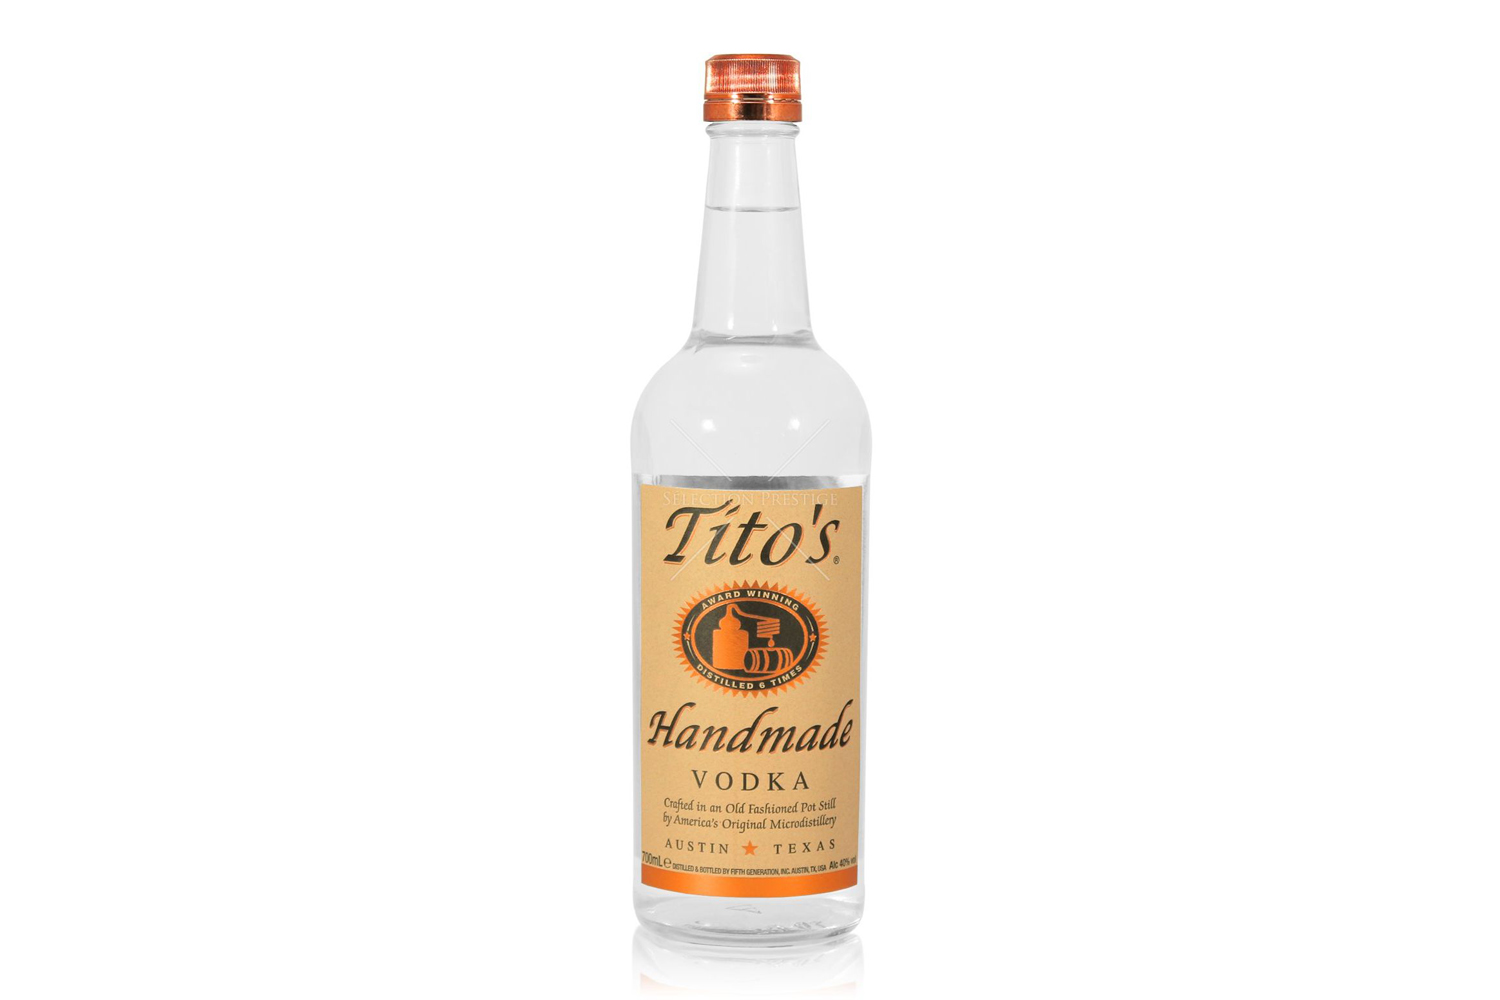 https://www.themanual.com/wp-content/uploads/sites/9/2021/03/titos-handmade-vodka.jpg?fit=800%2C800&p=1